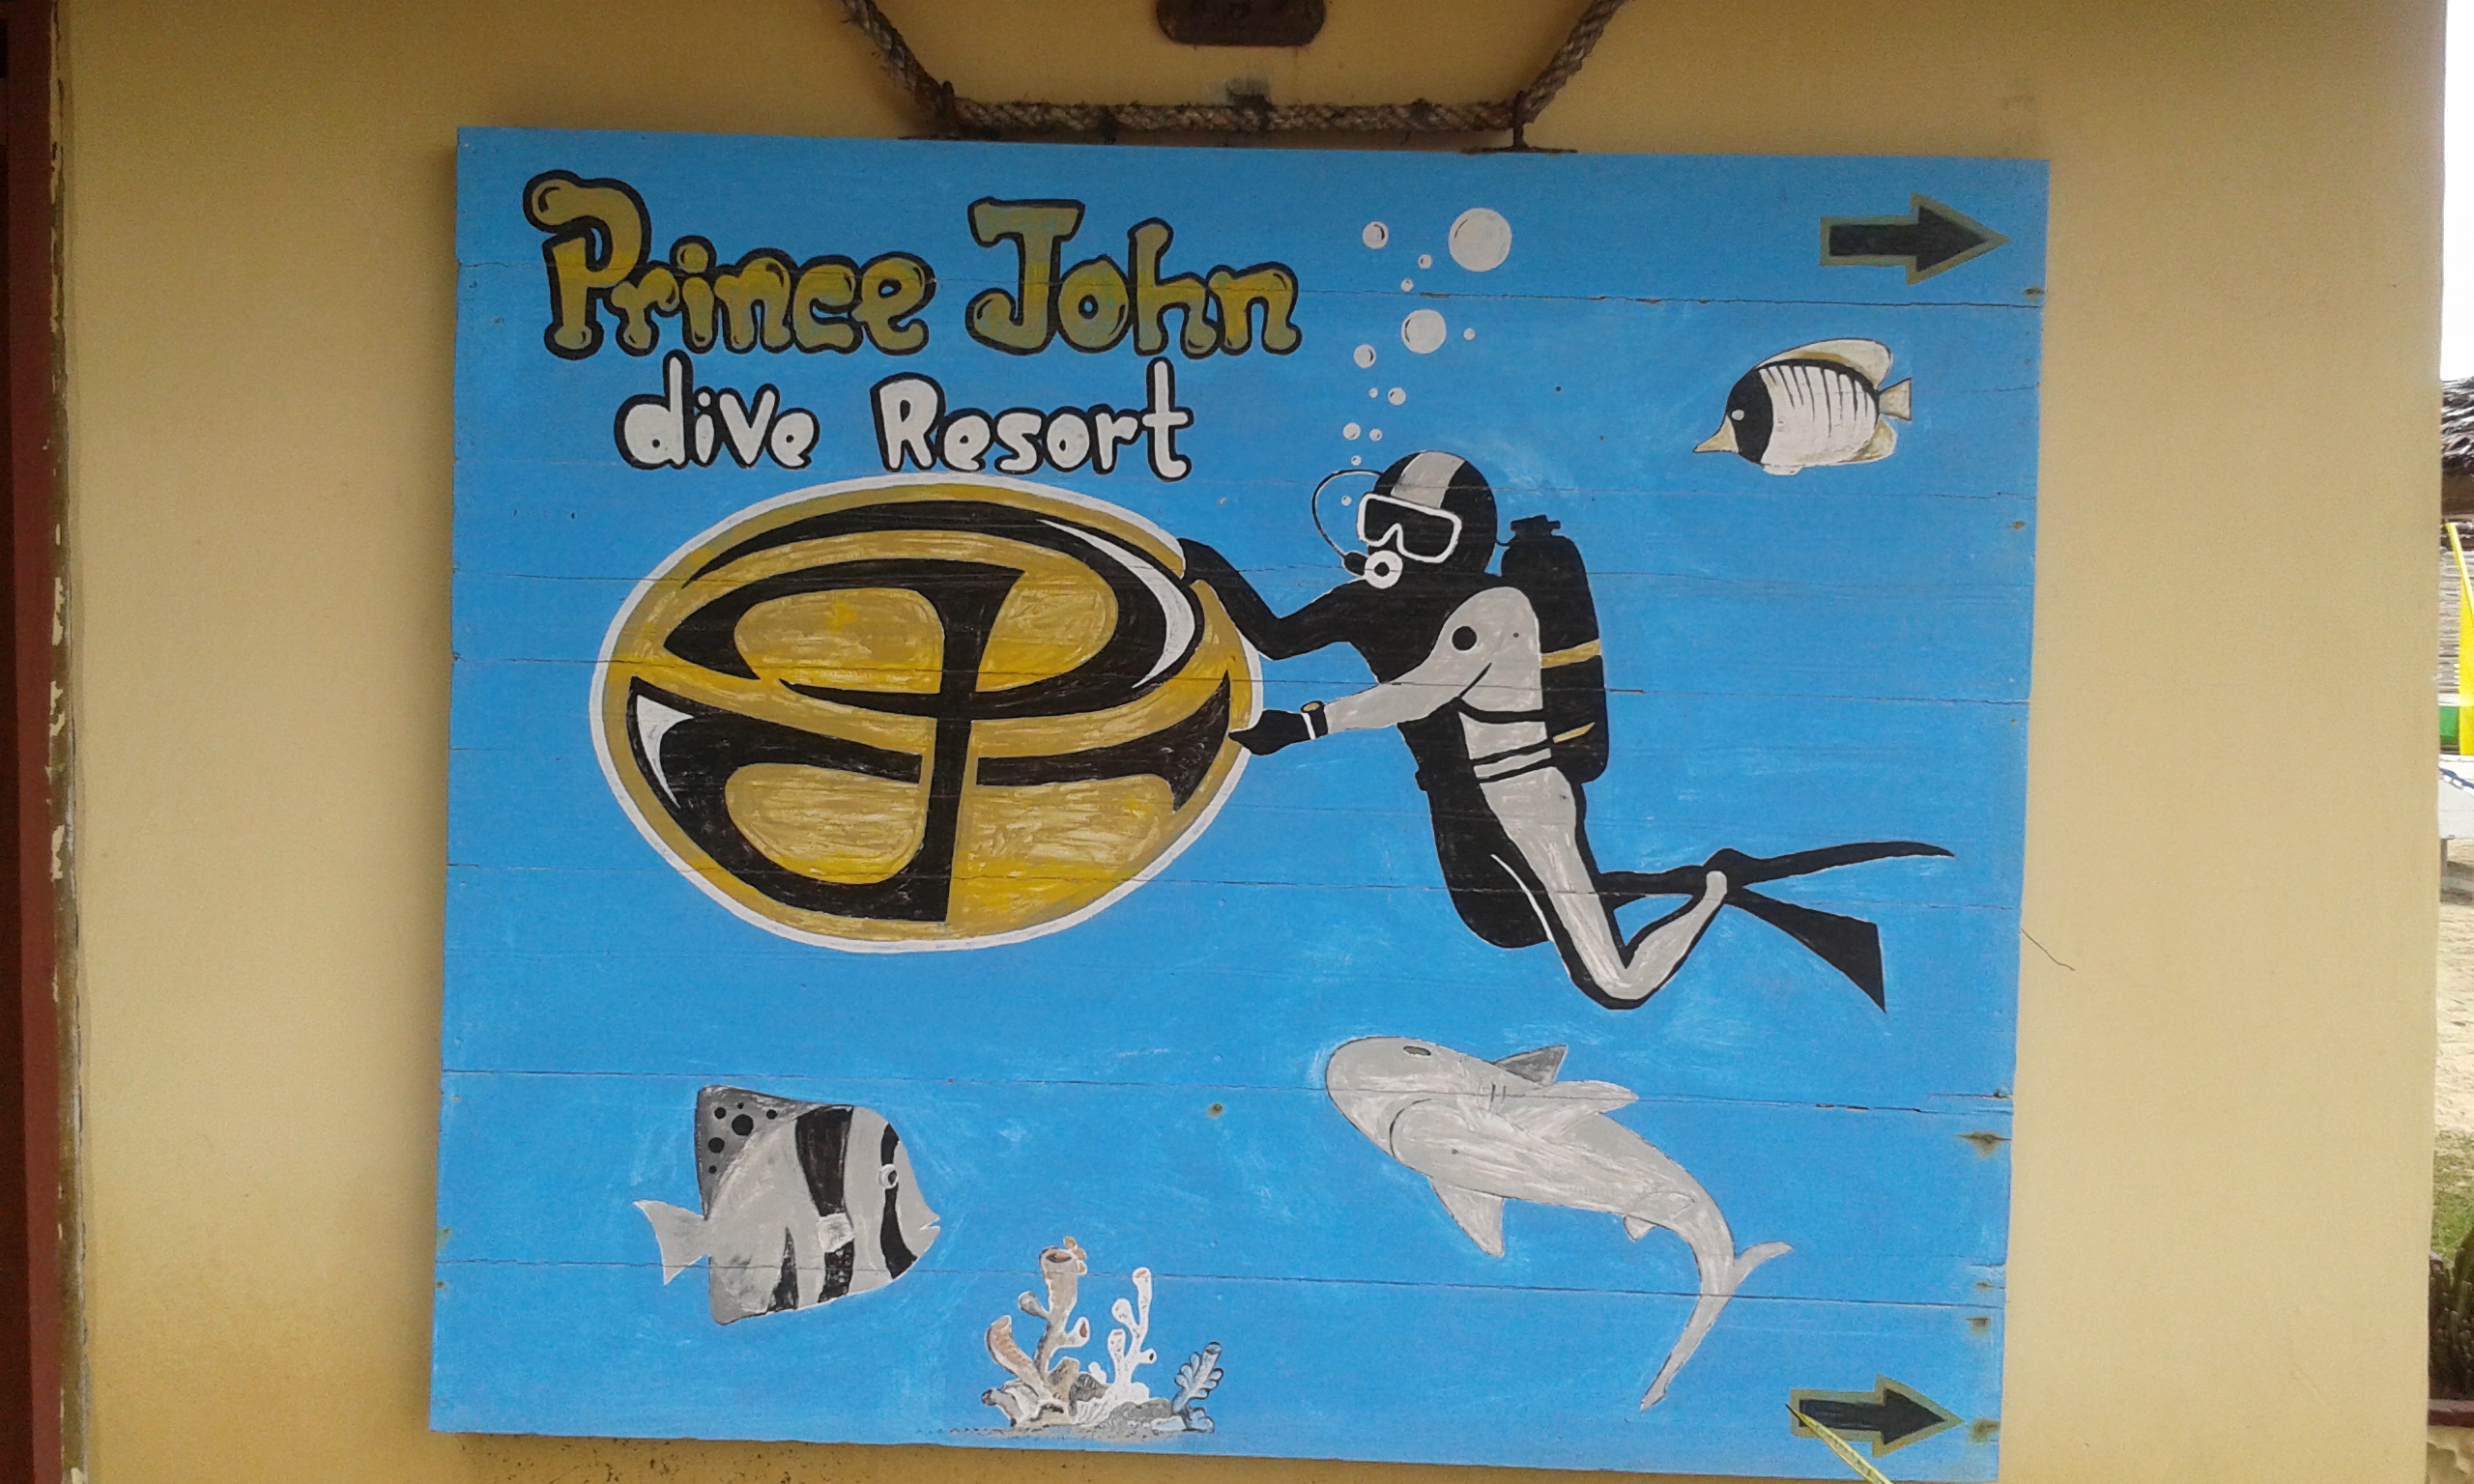 Das Resort - Prince John